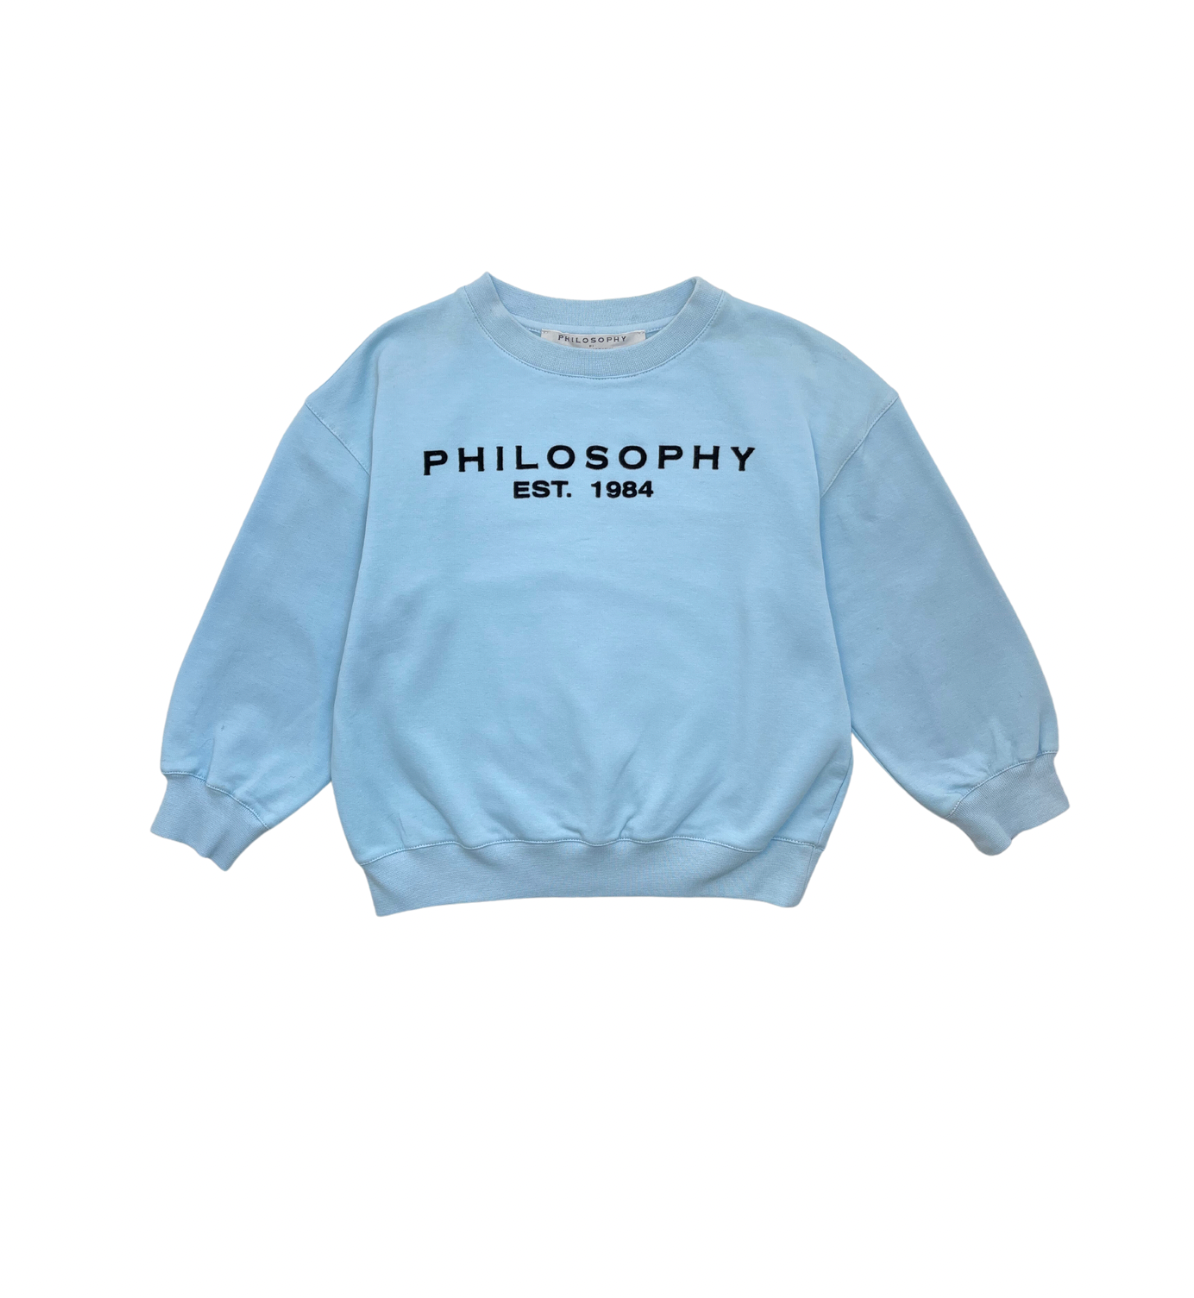 PHILOSOPHY DI LORENZO - Ultra soft blue sweatshirt - 6 years old